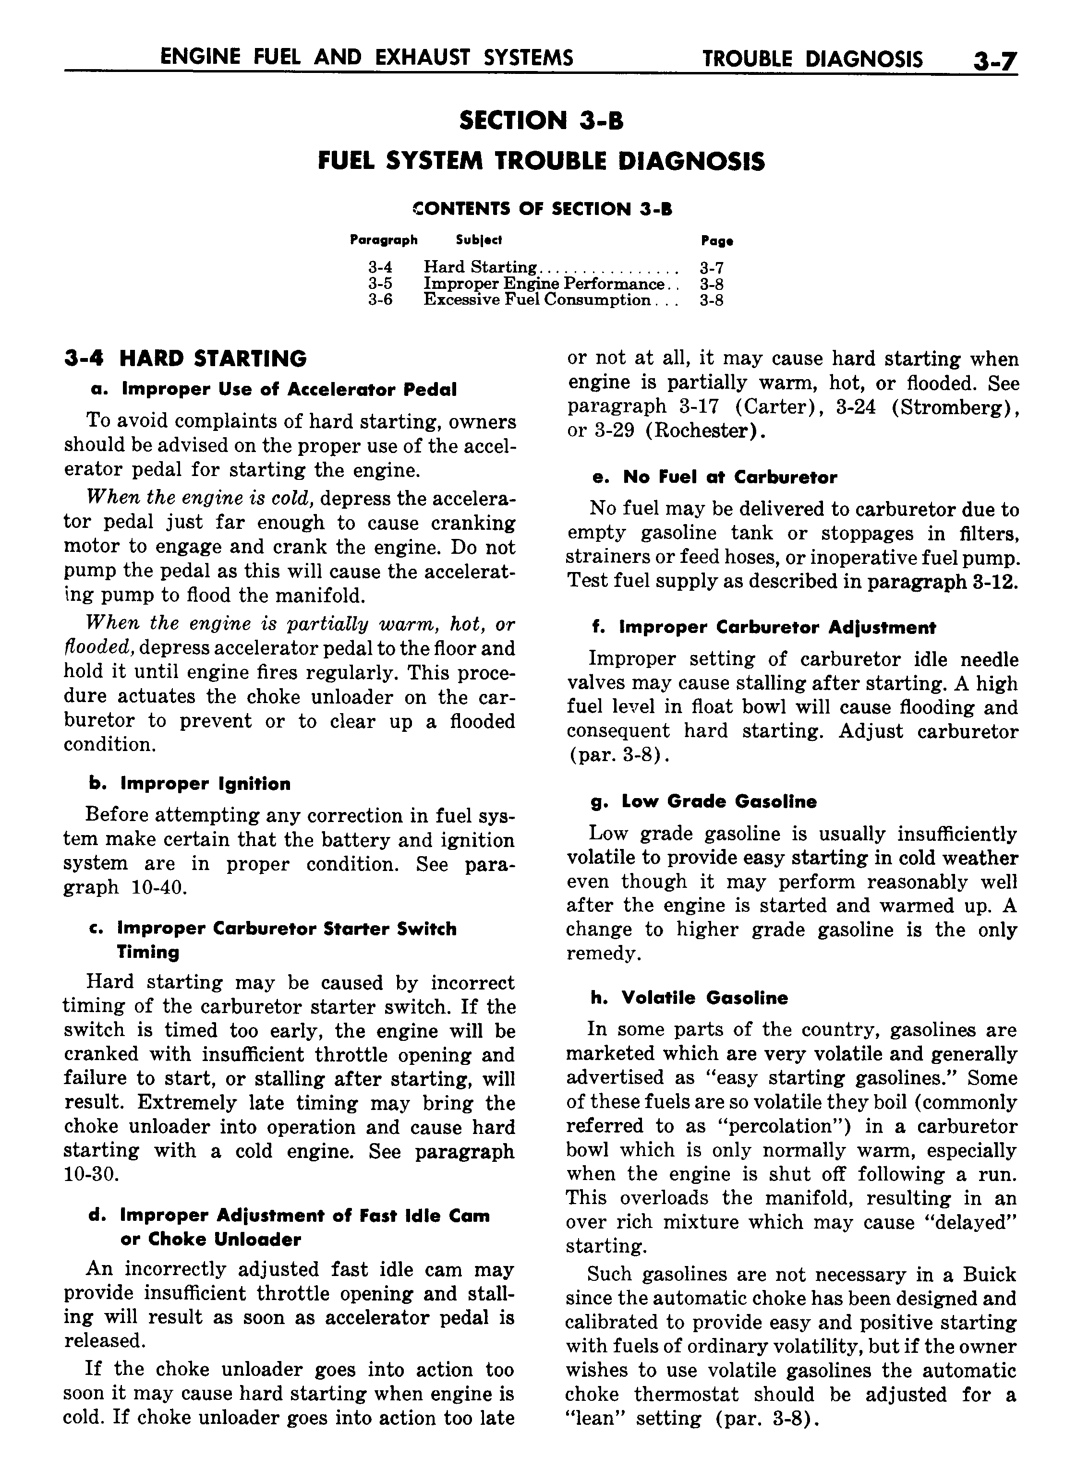 n_04 1957 Buick Shop Manual - Engine Fuel & Exhaust-007-007.jpg